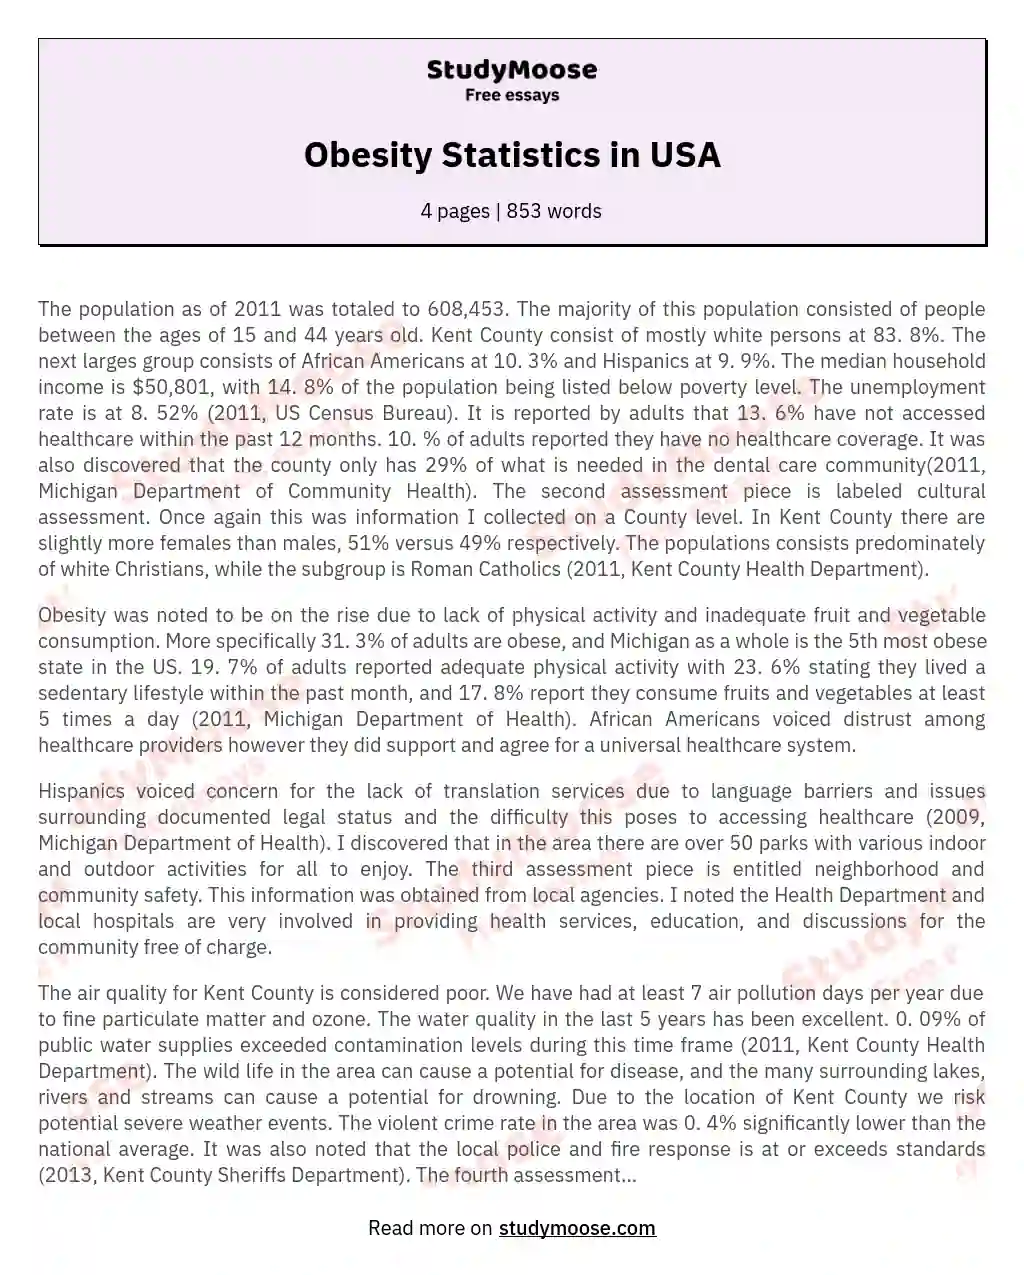 Obesity Statistics in USA essay